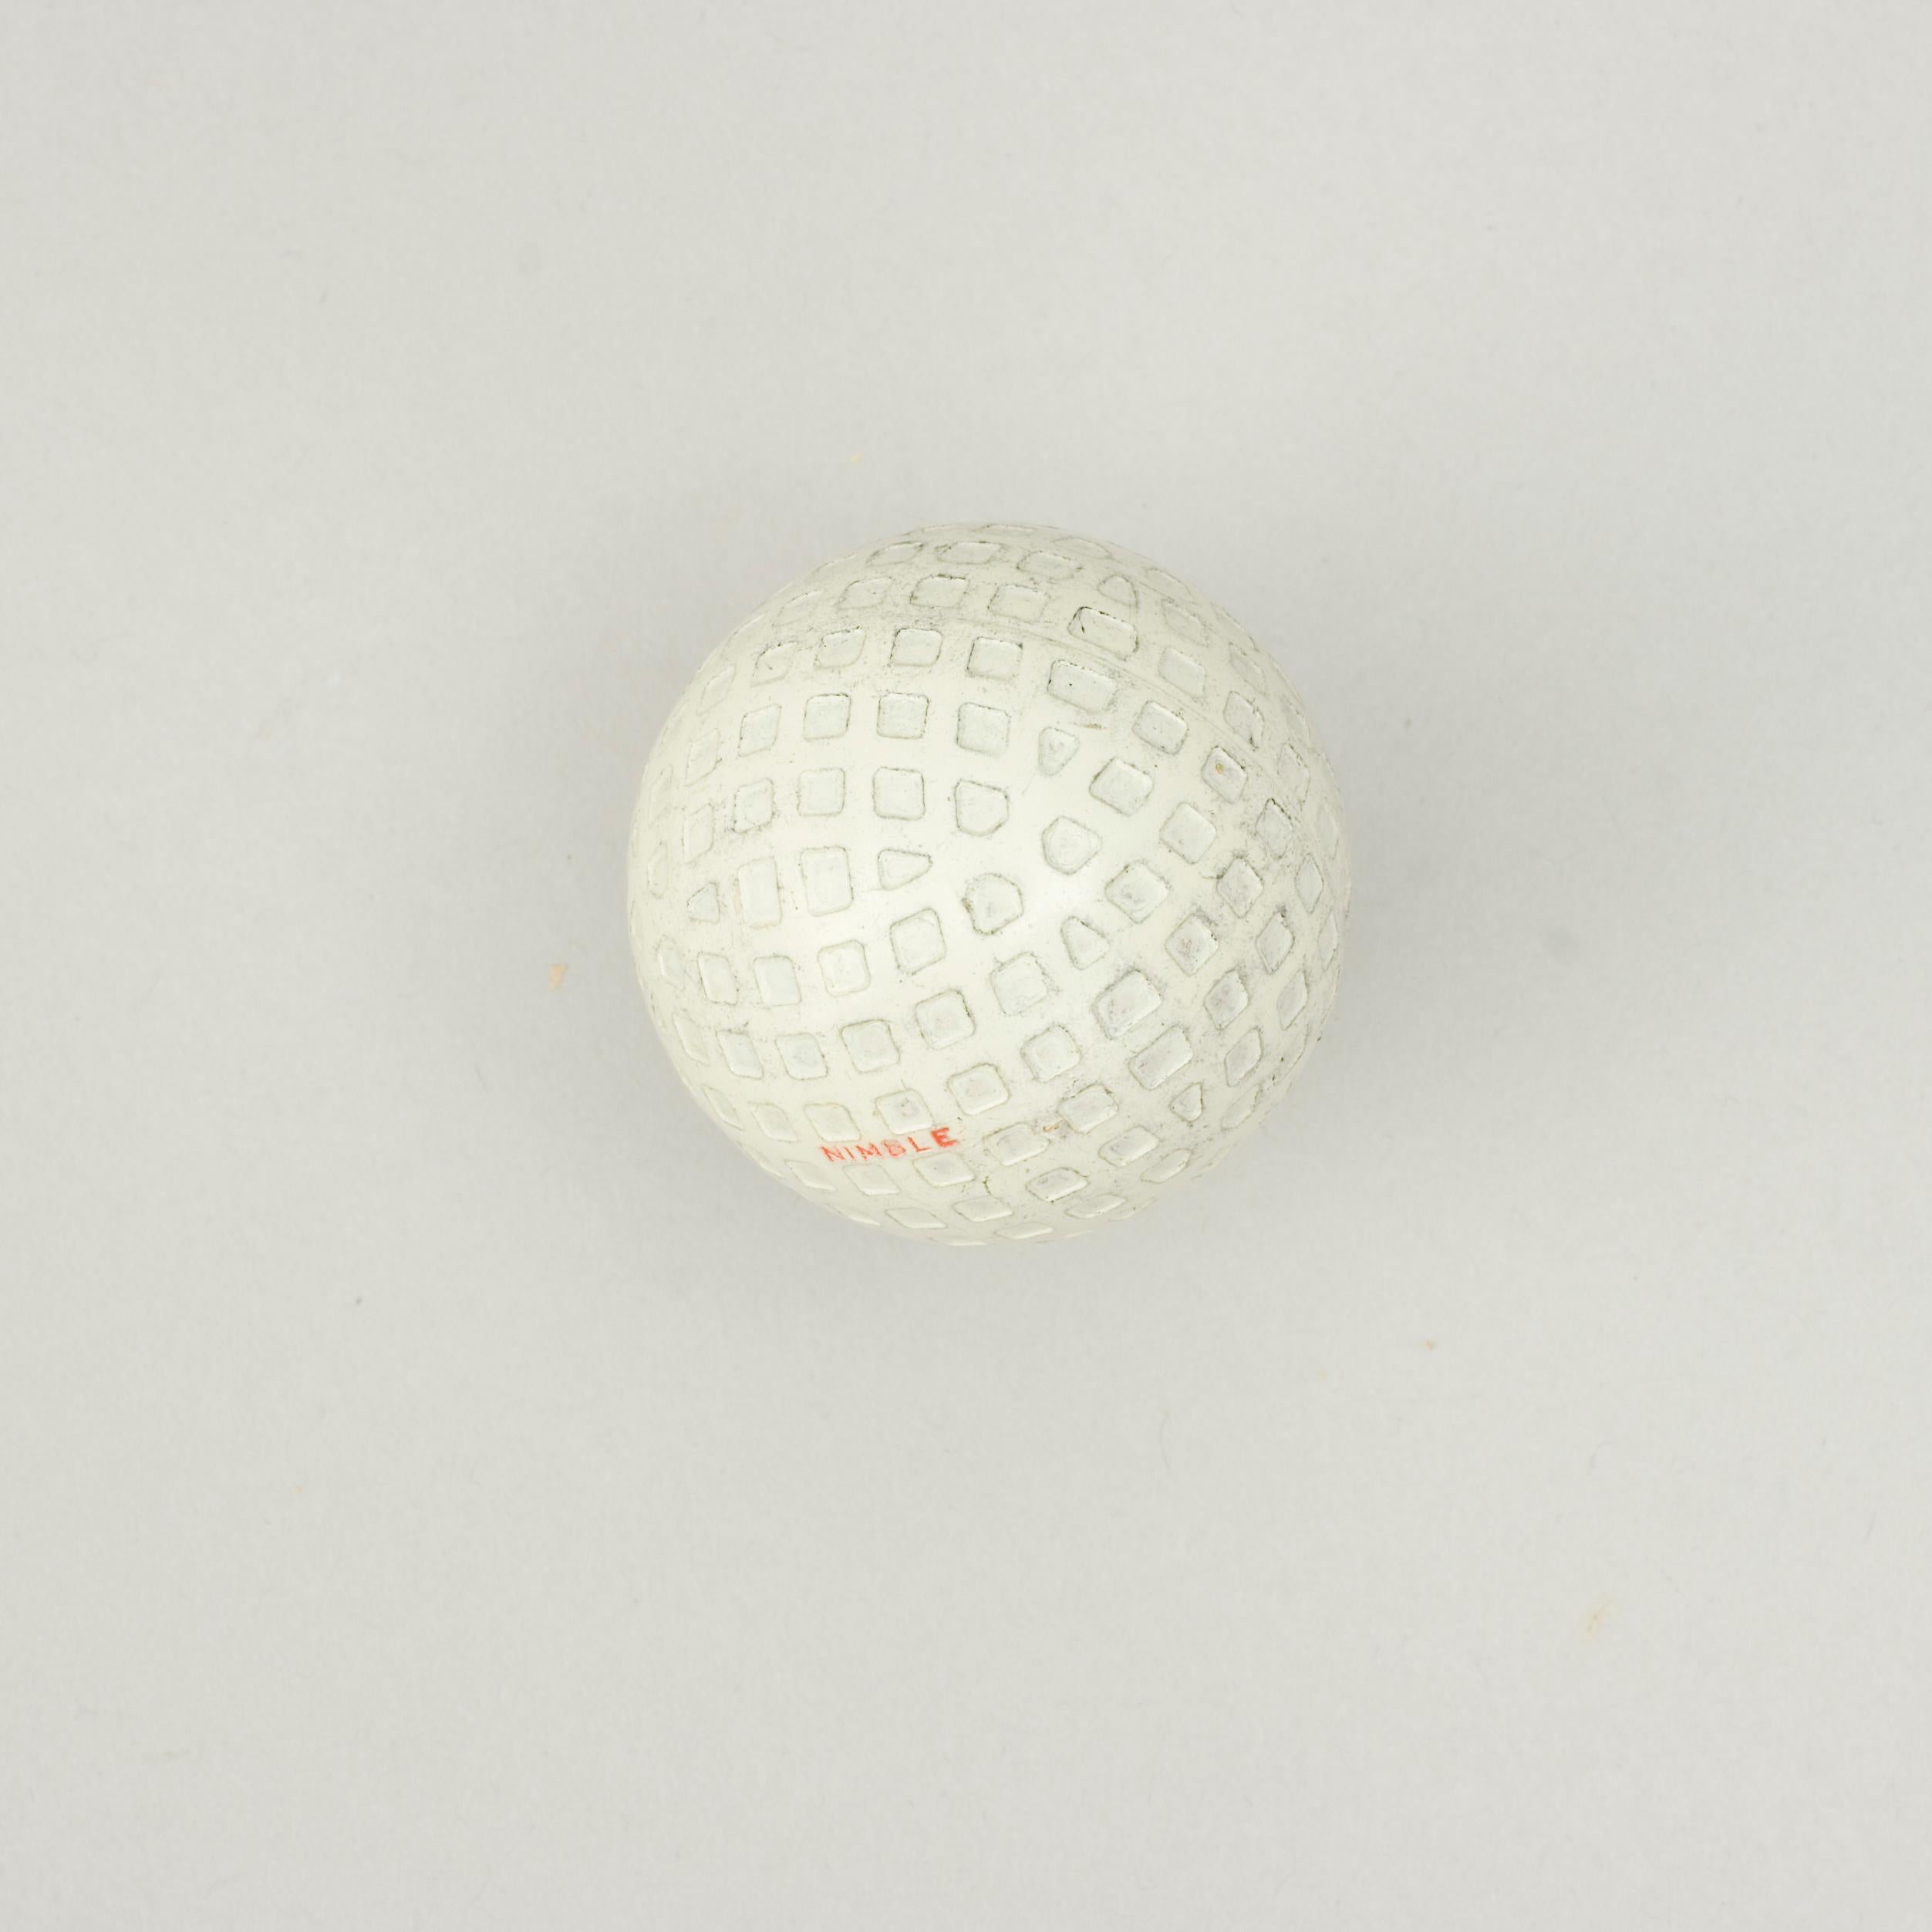 Vintage Mesh Pattern, Nimble Golf Ball, by Spalding 1